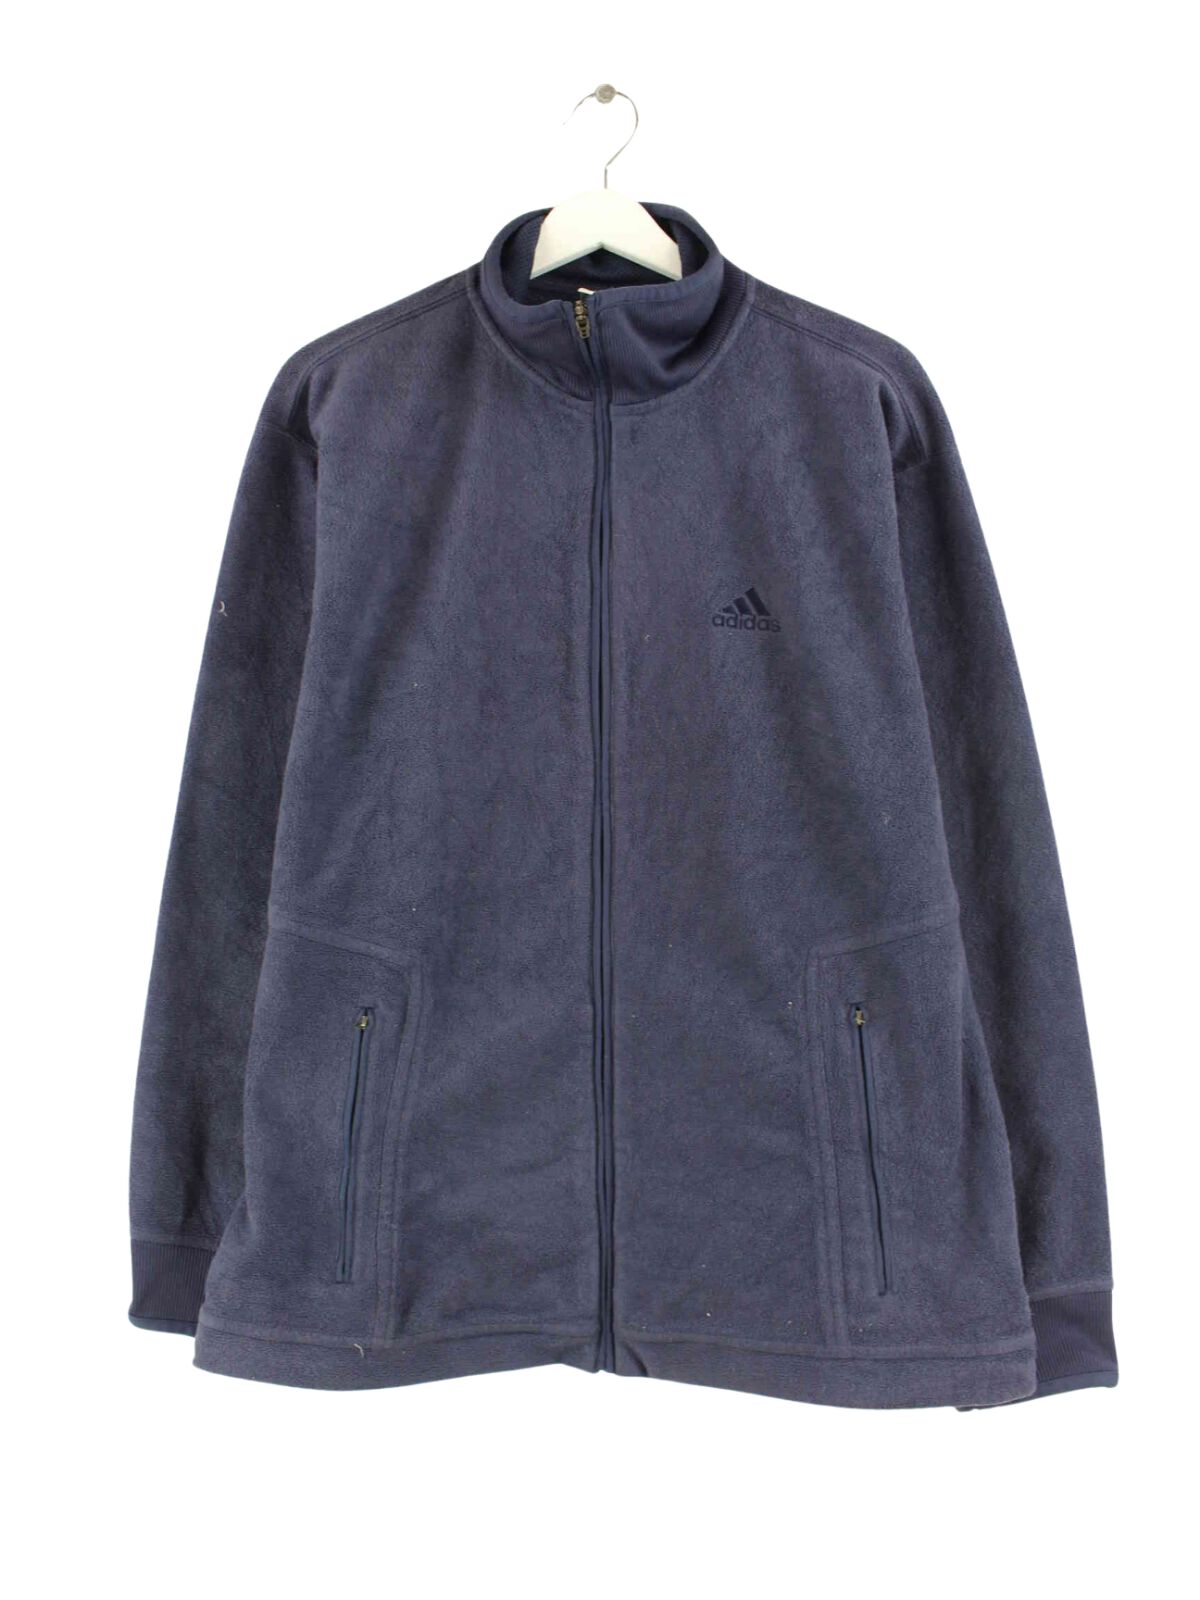 Adidas 90s Vintage Fleece Sweatjacke Blau L (front image)